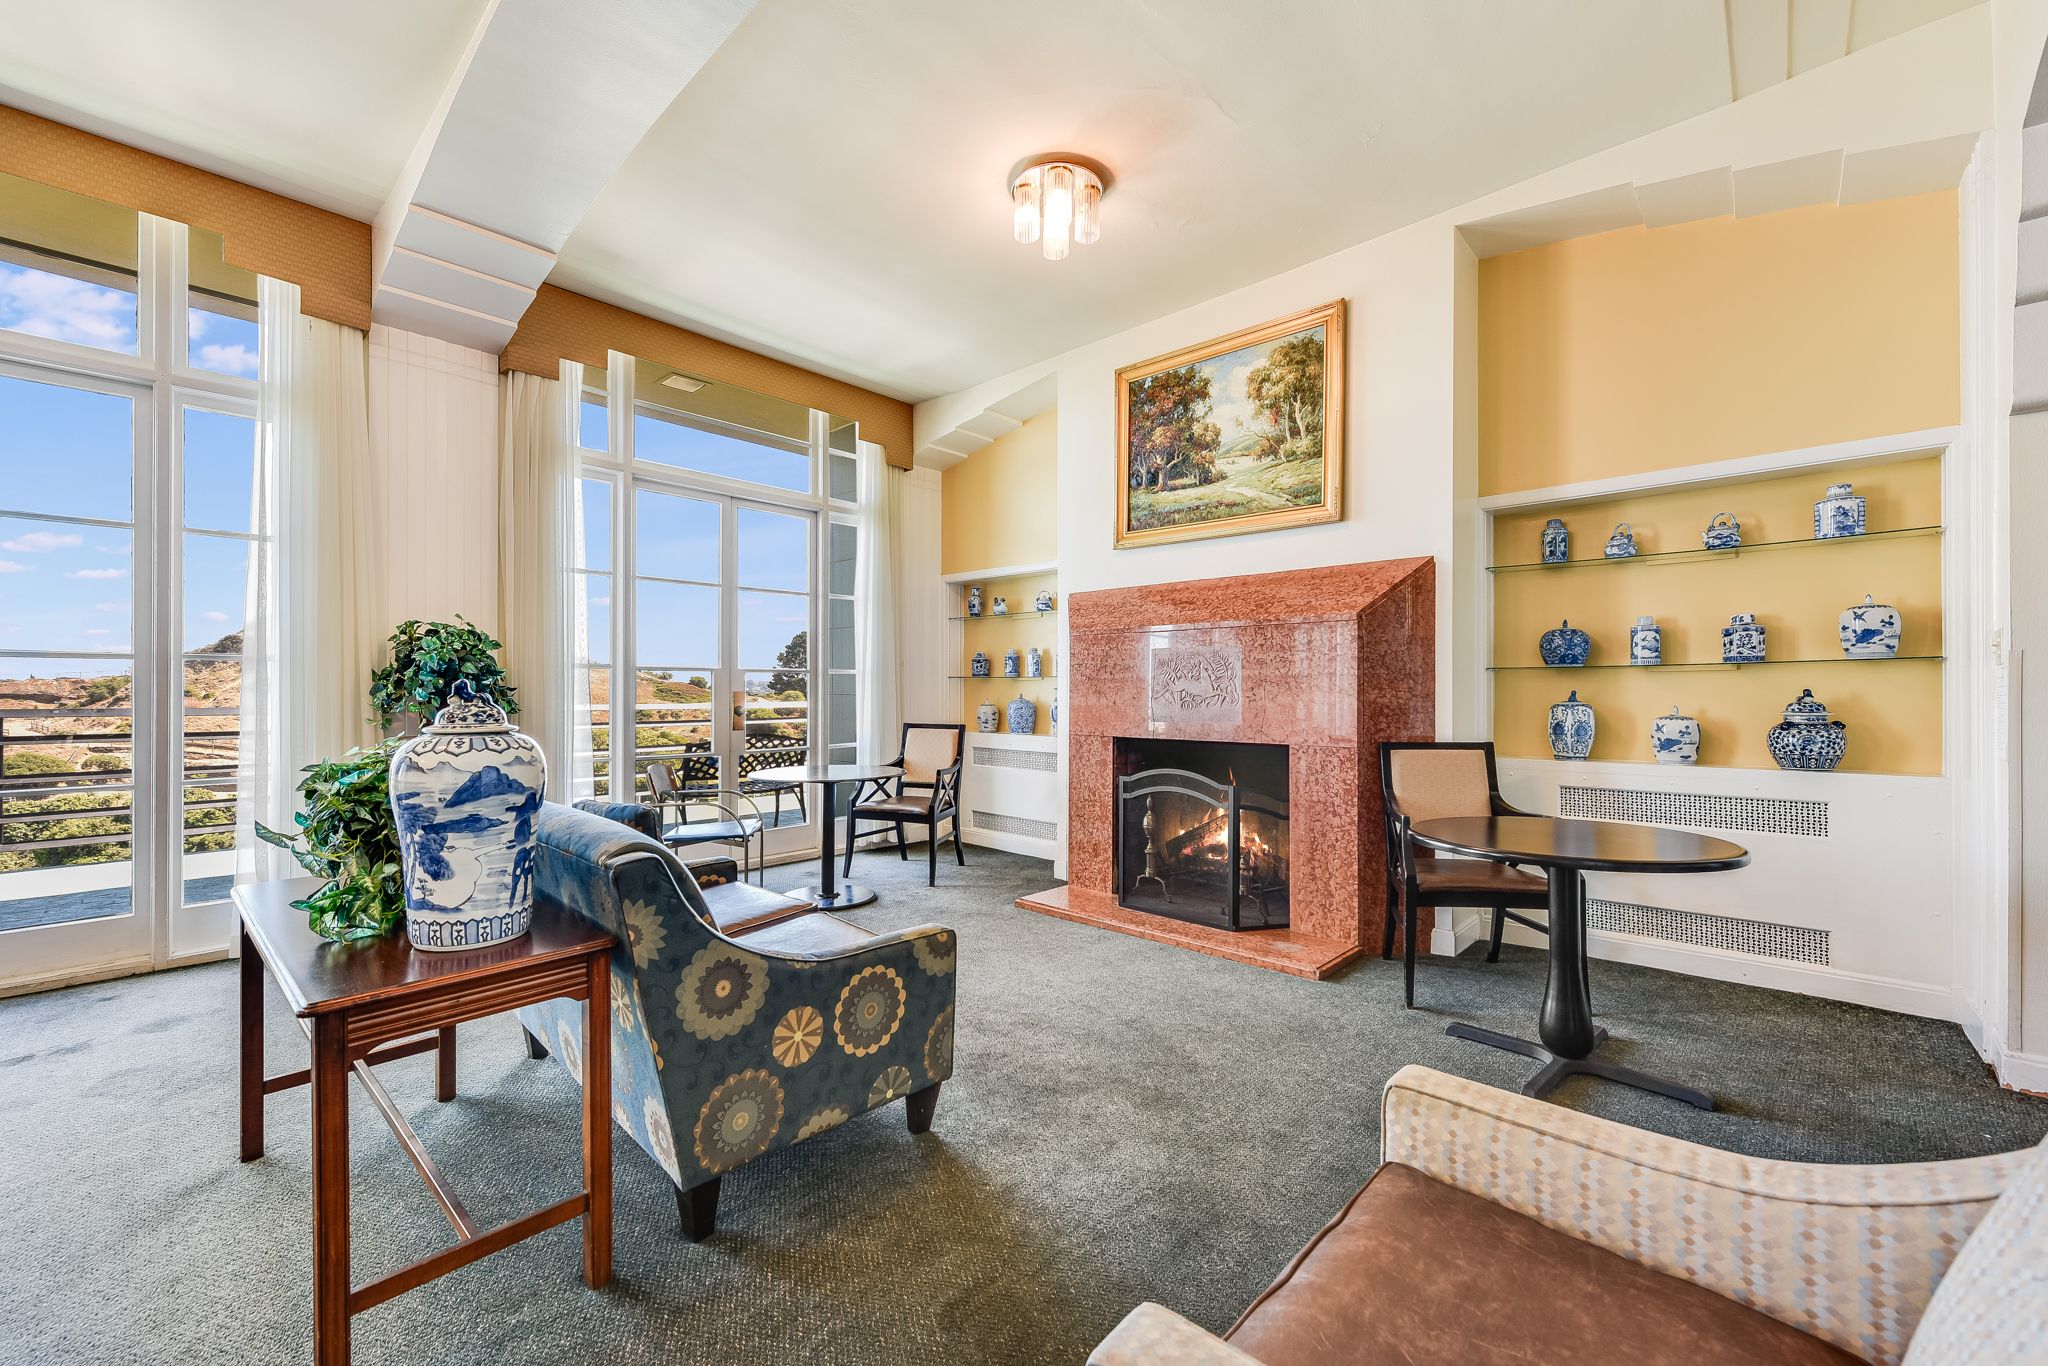 Interior view of Buena Vista Manor House senior living community featuring elegant decor and furniture.